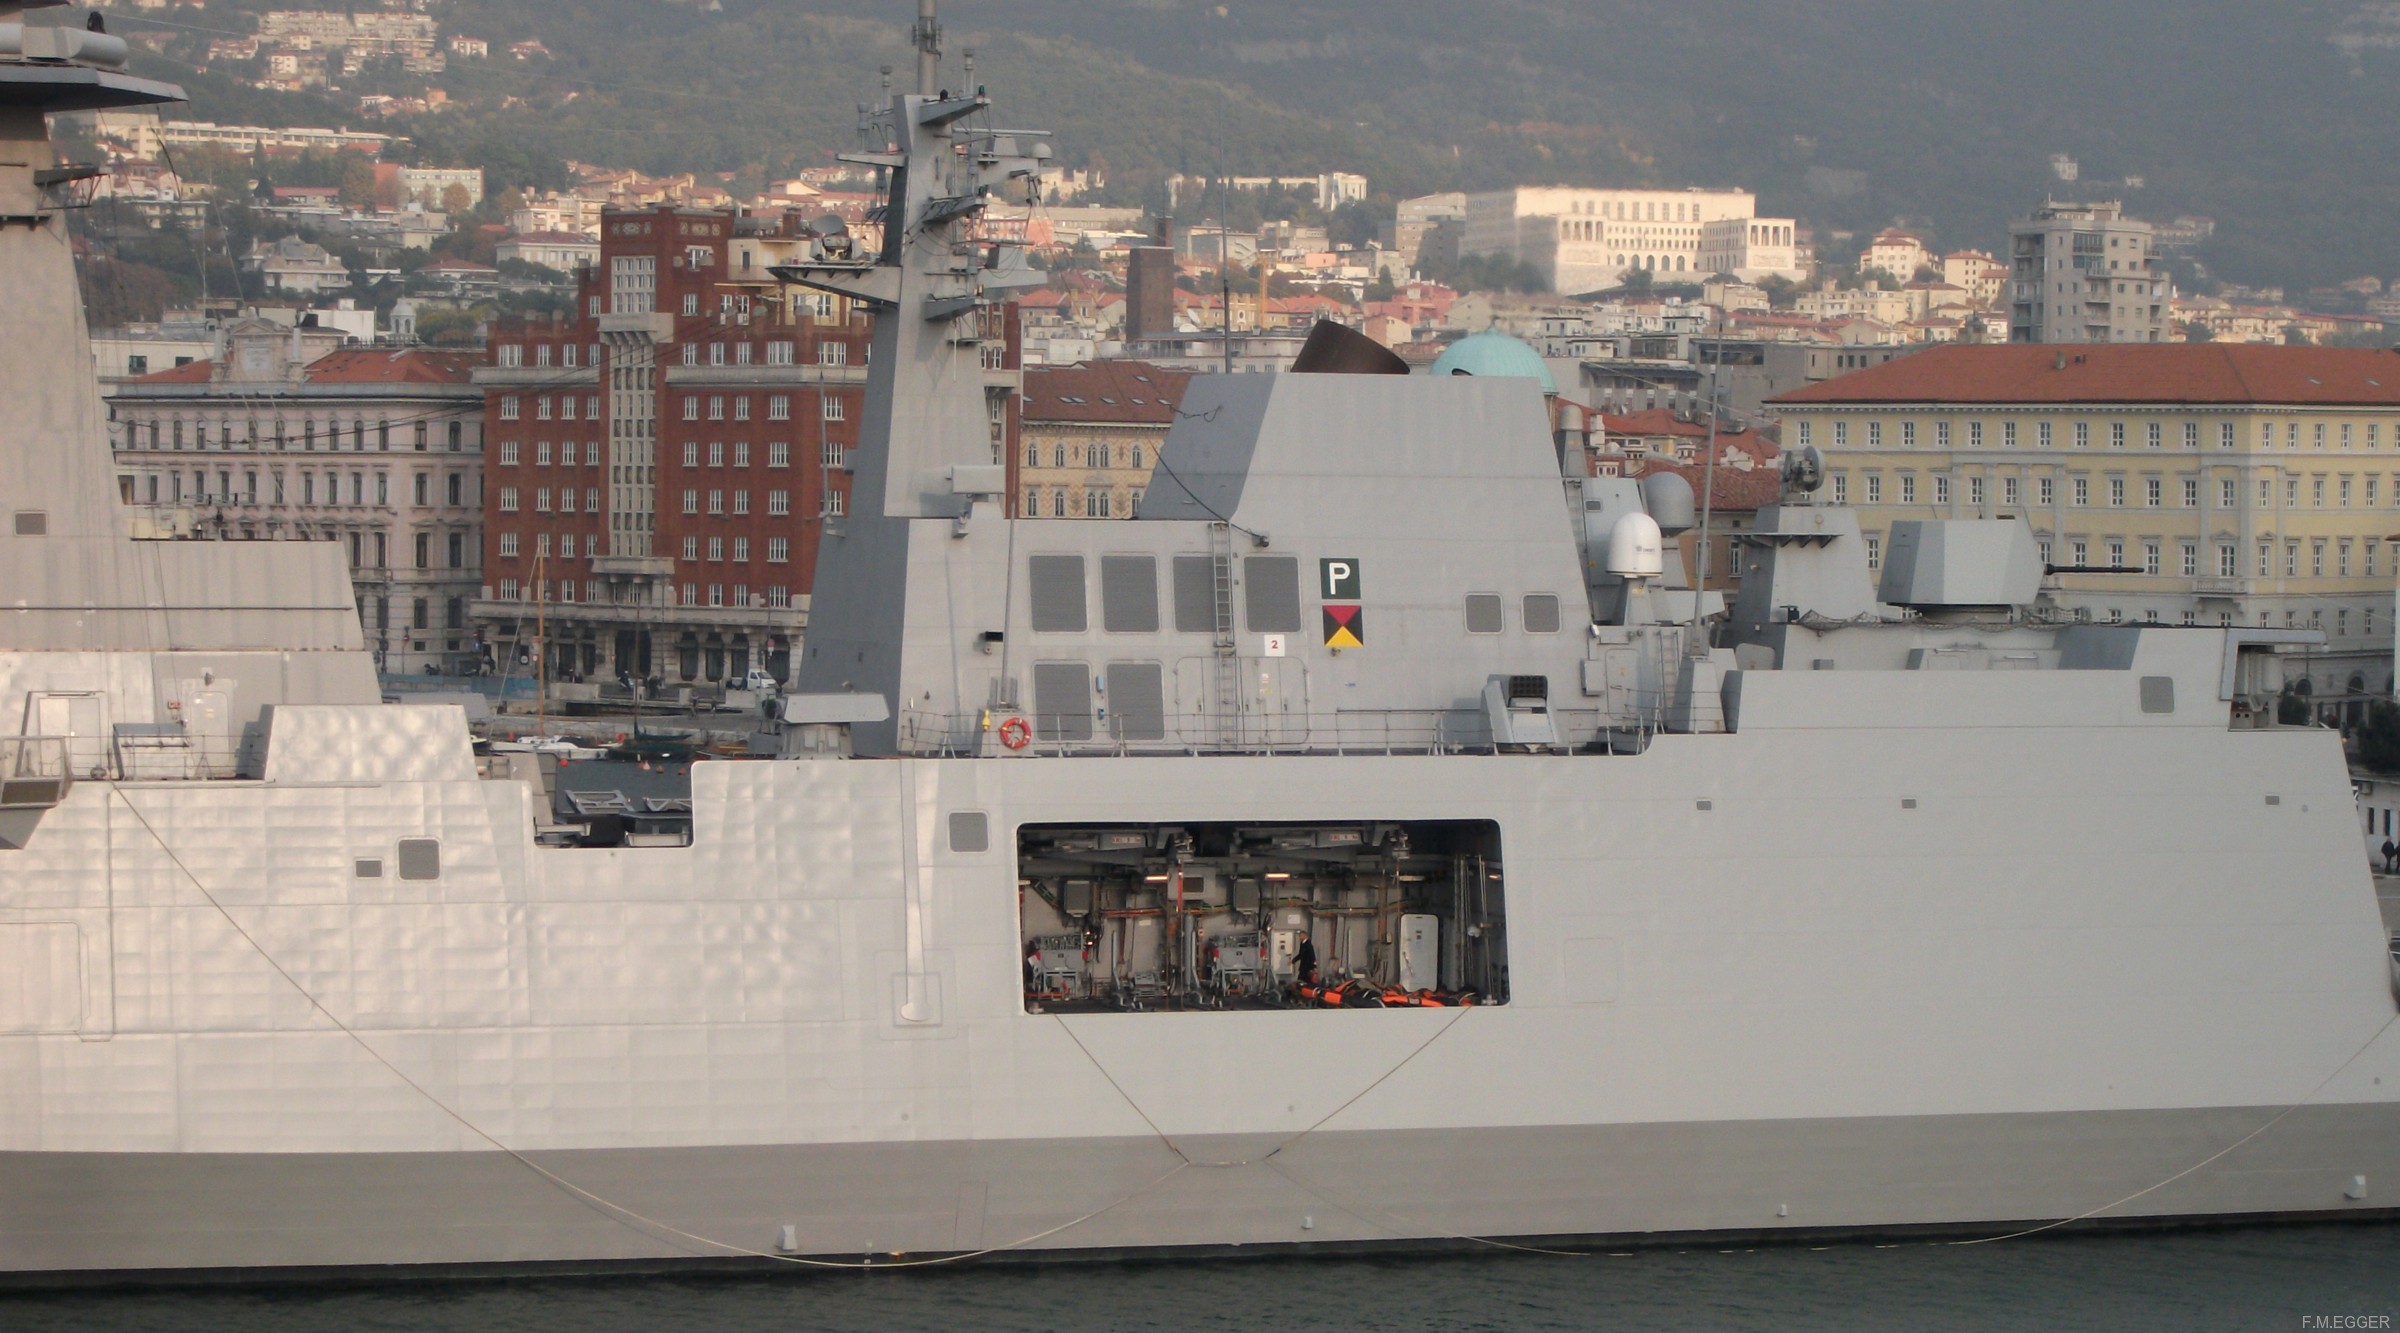 f-591 virginio fasan its nave bergamini fremm class guided missile frigate italian navy marina militare x39 trieste port